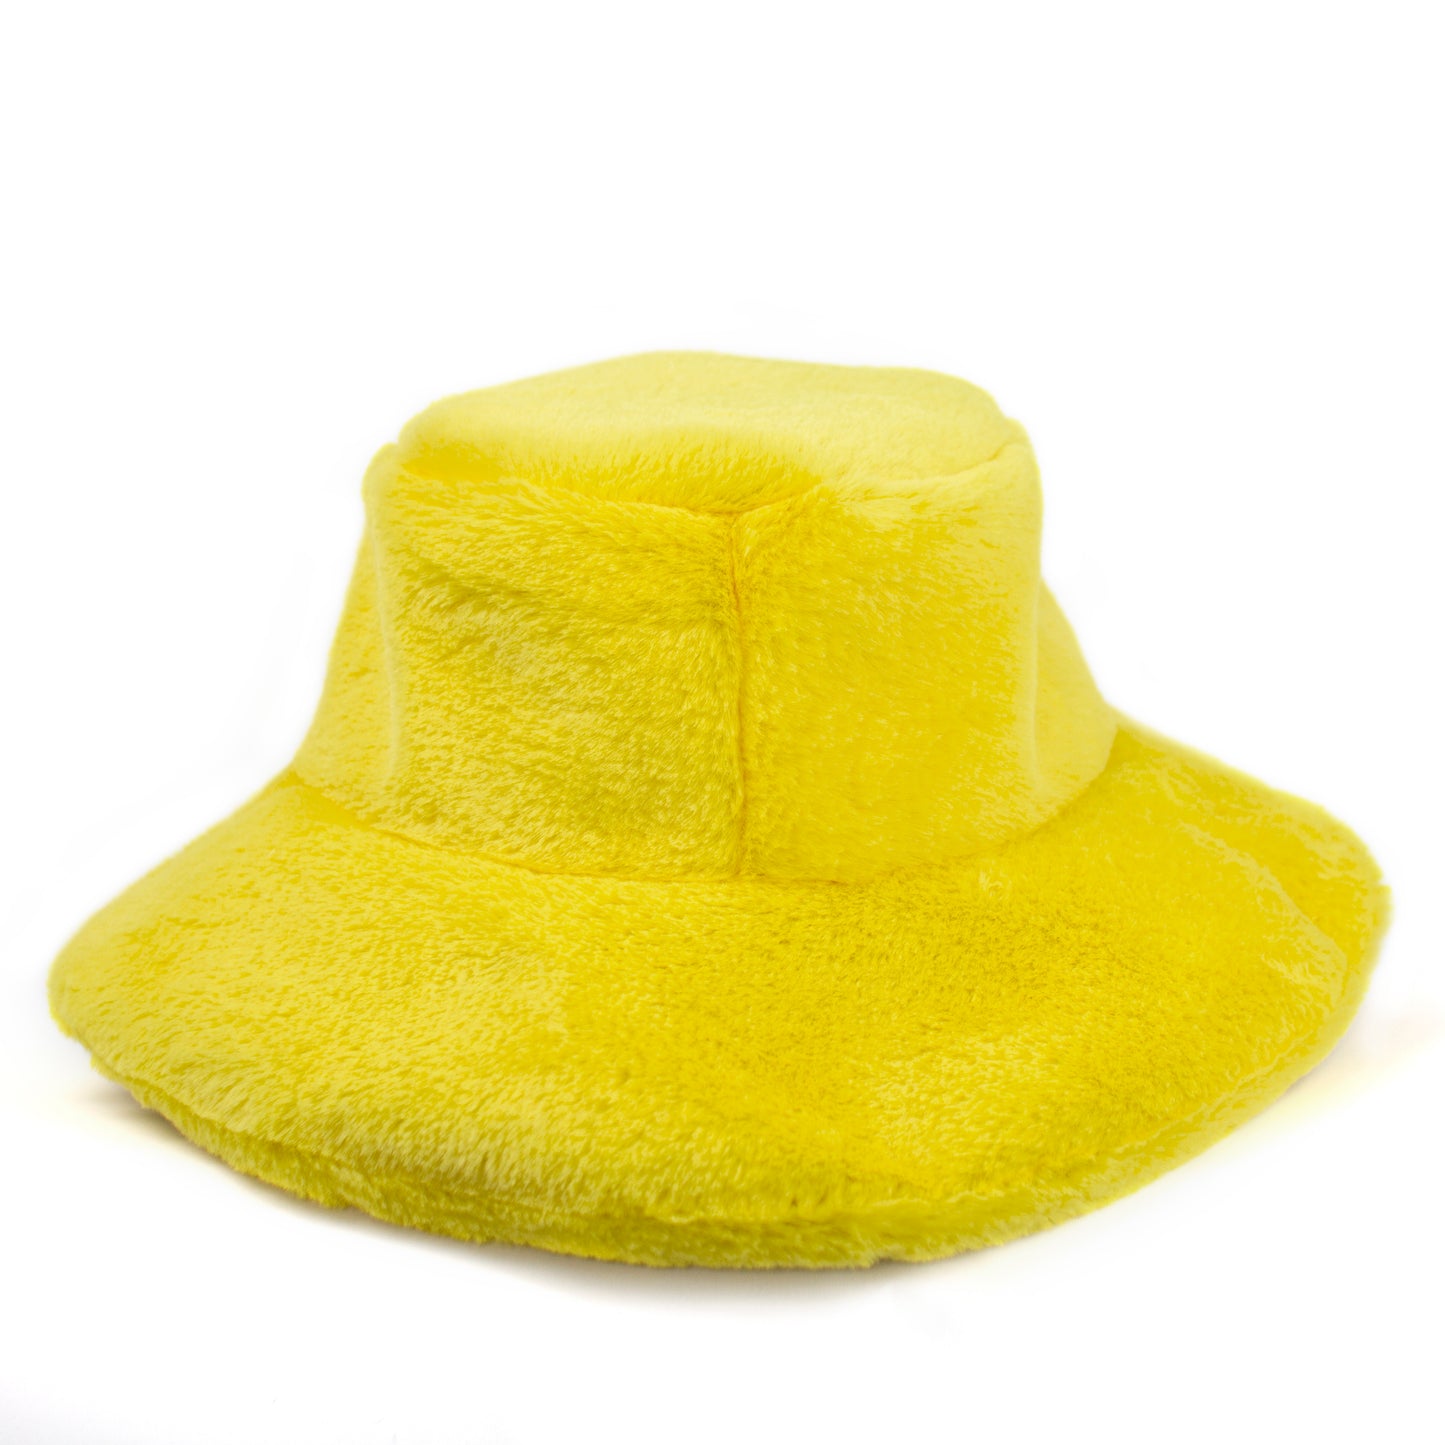 "YELLOW" large bucket hat